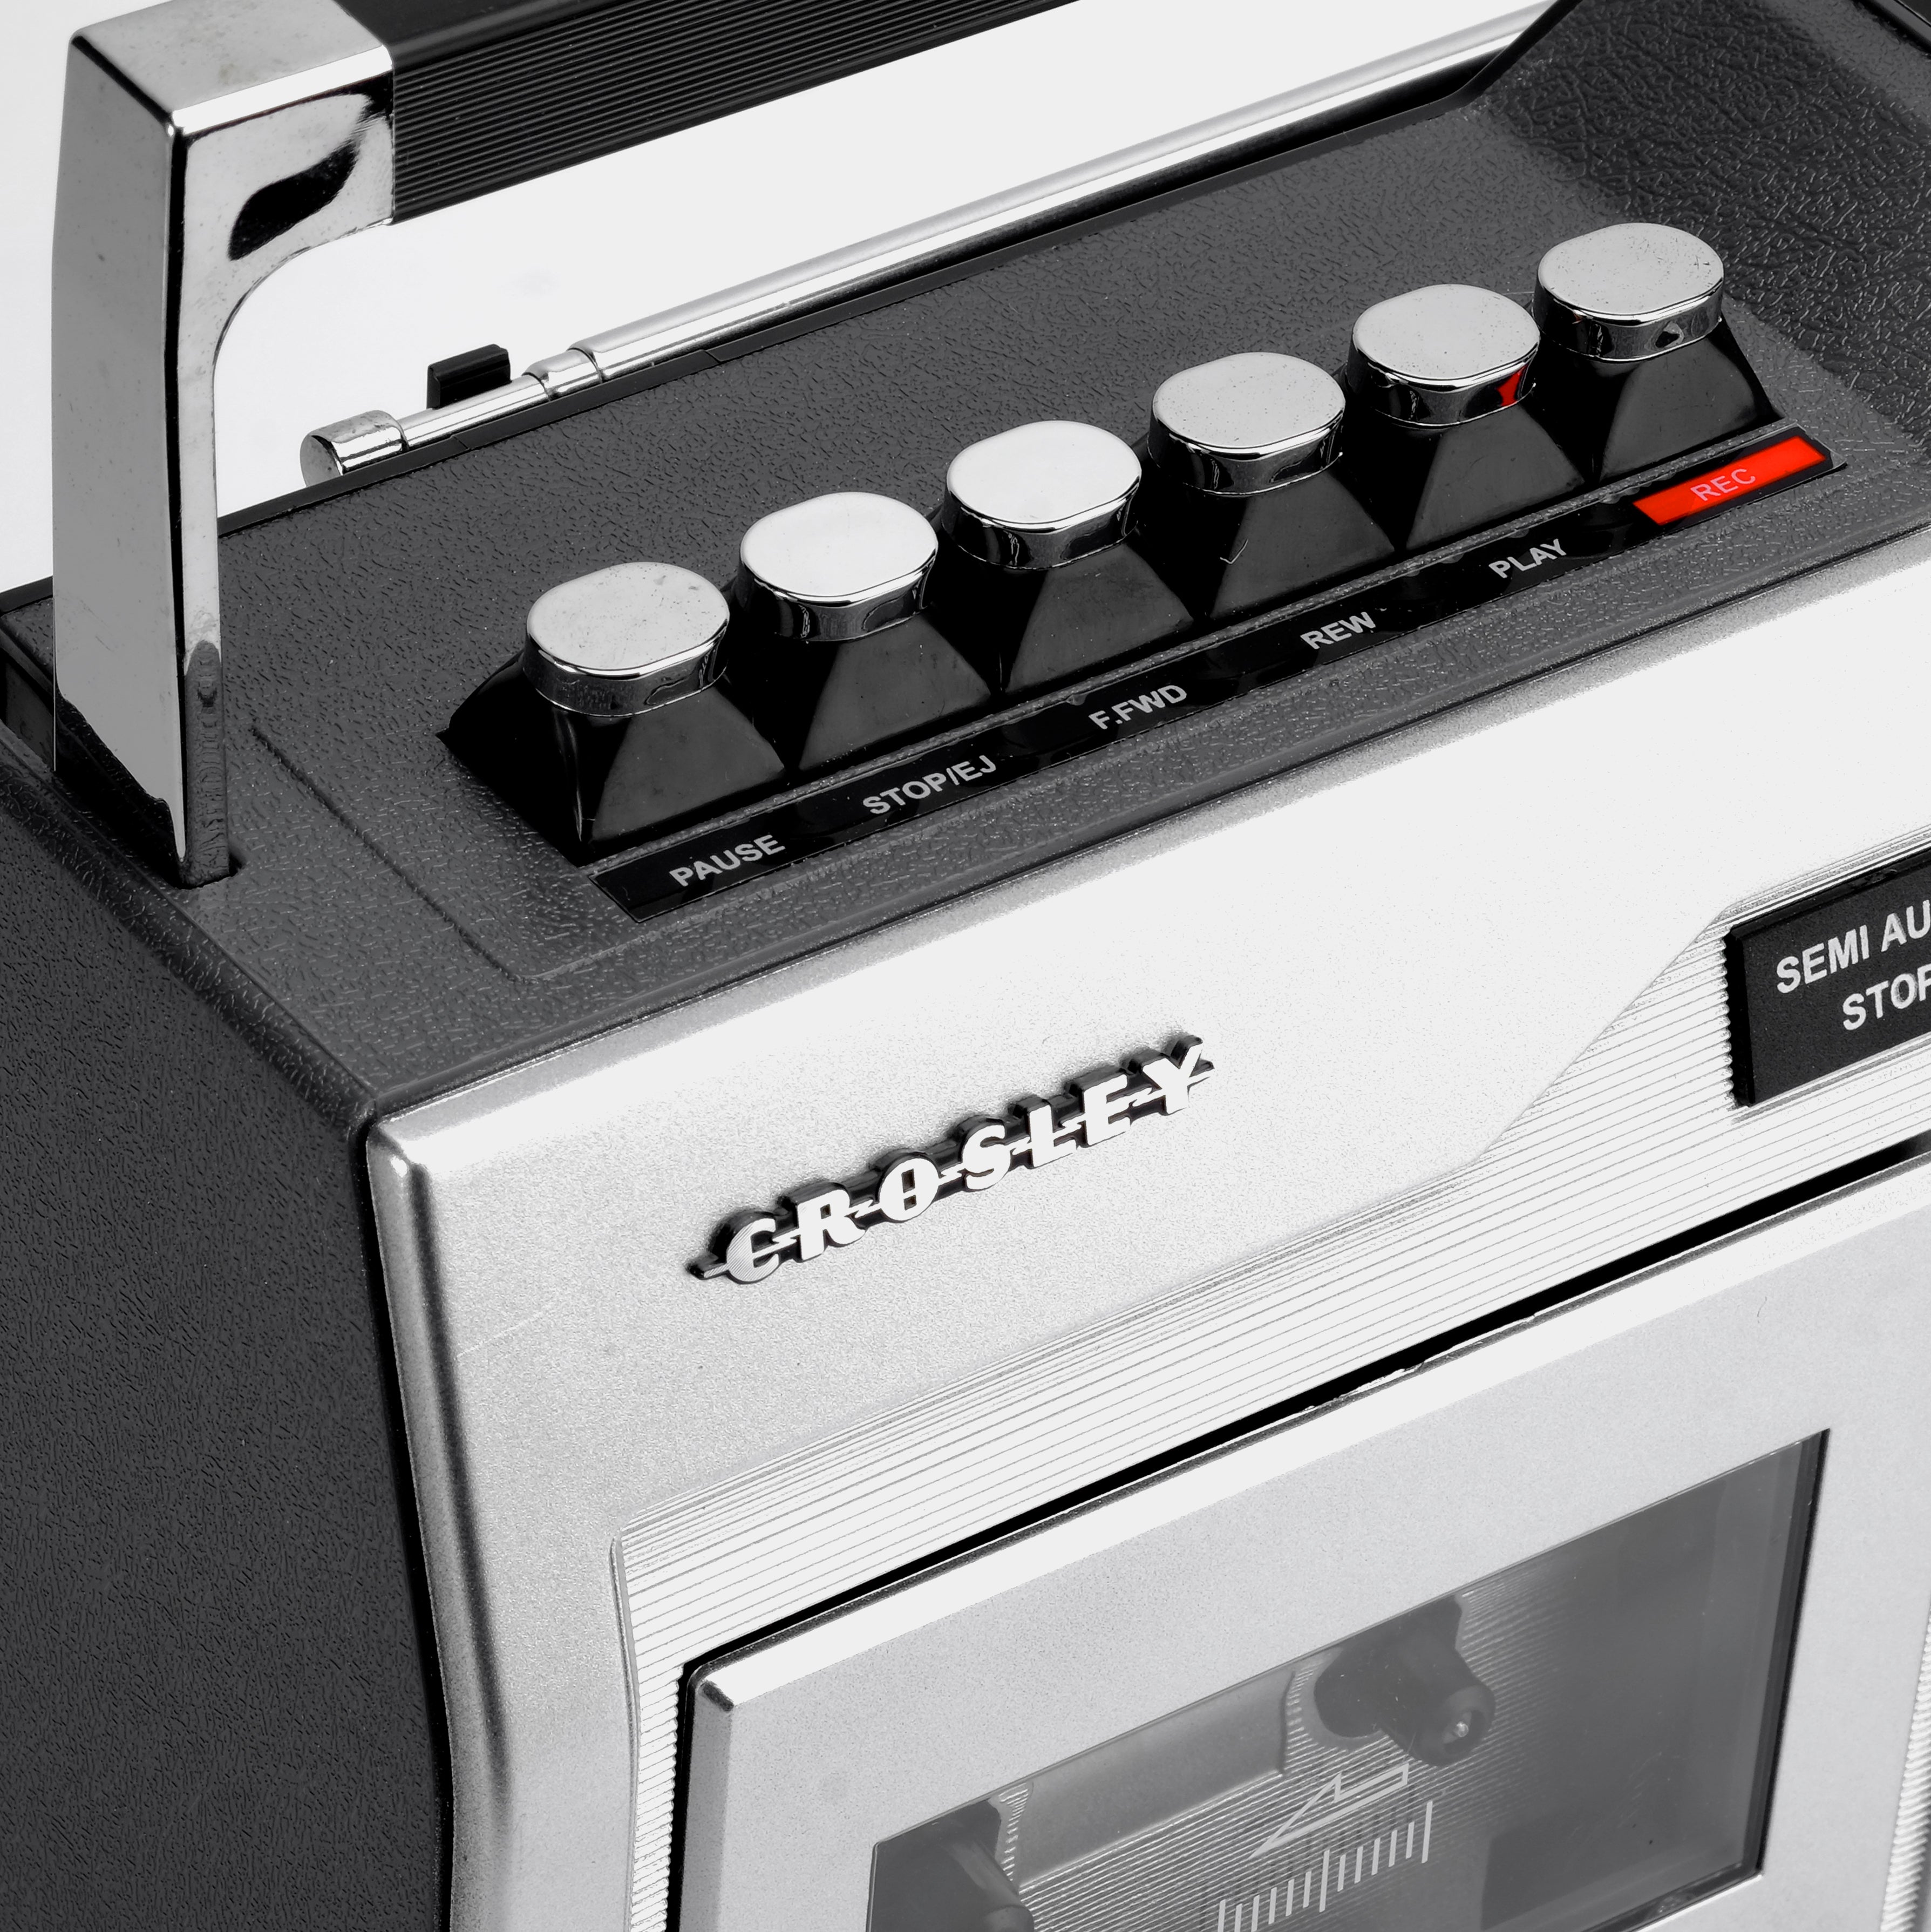 Crosley CT200 AM/FM Boombox Cassette Player